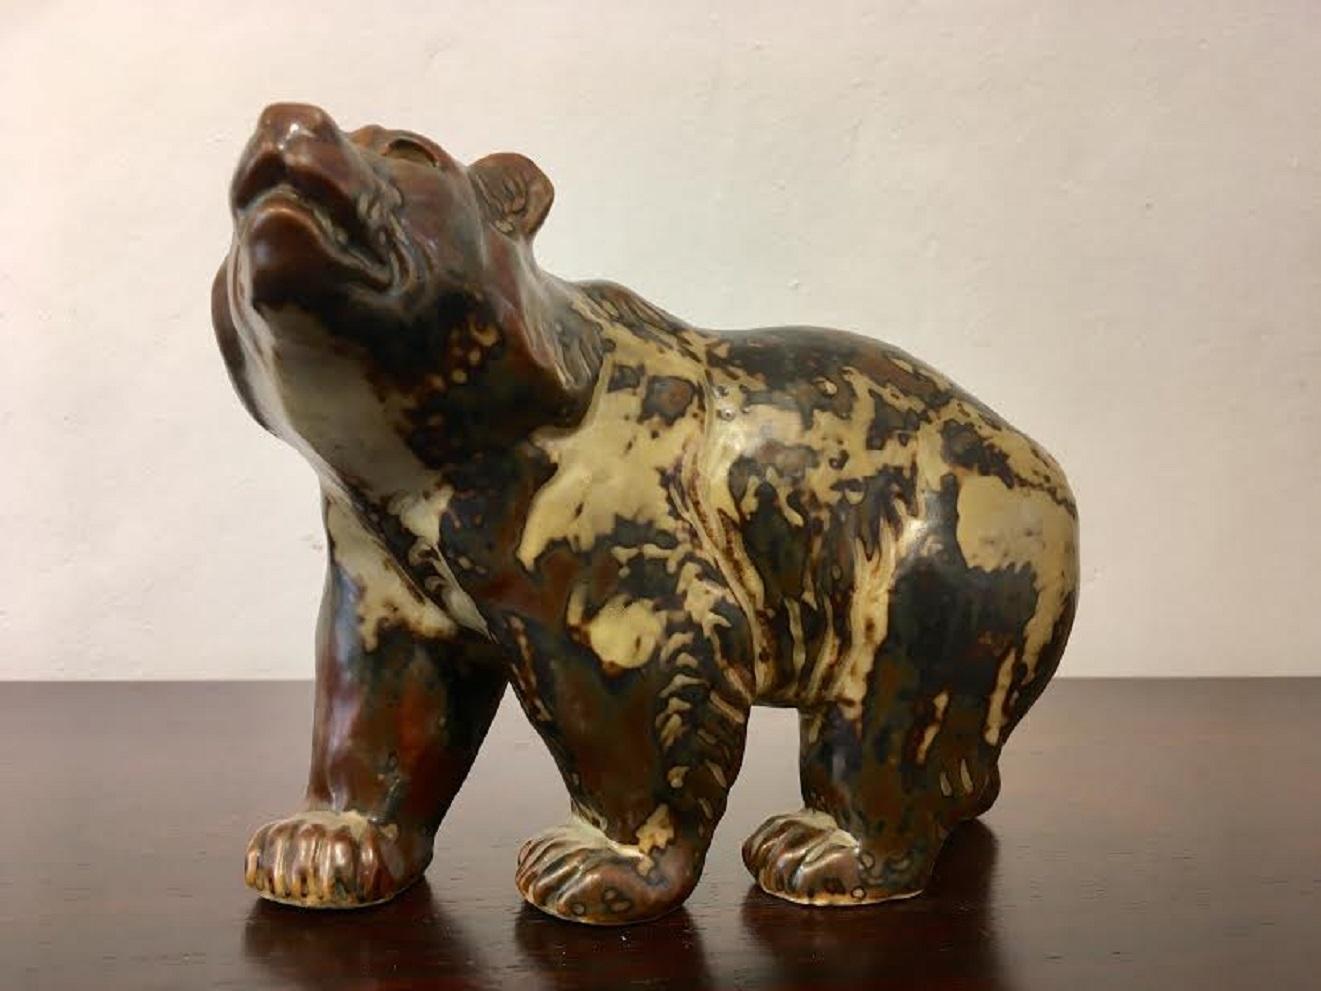 Bear in ceramic by Knud Kyhn, 1950.